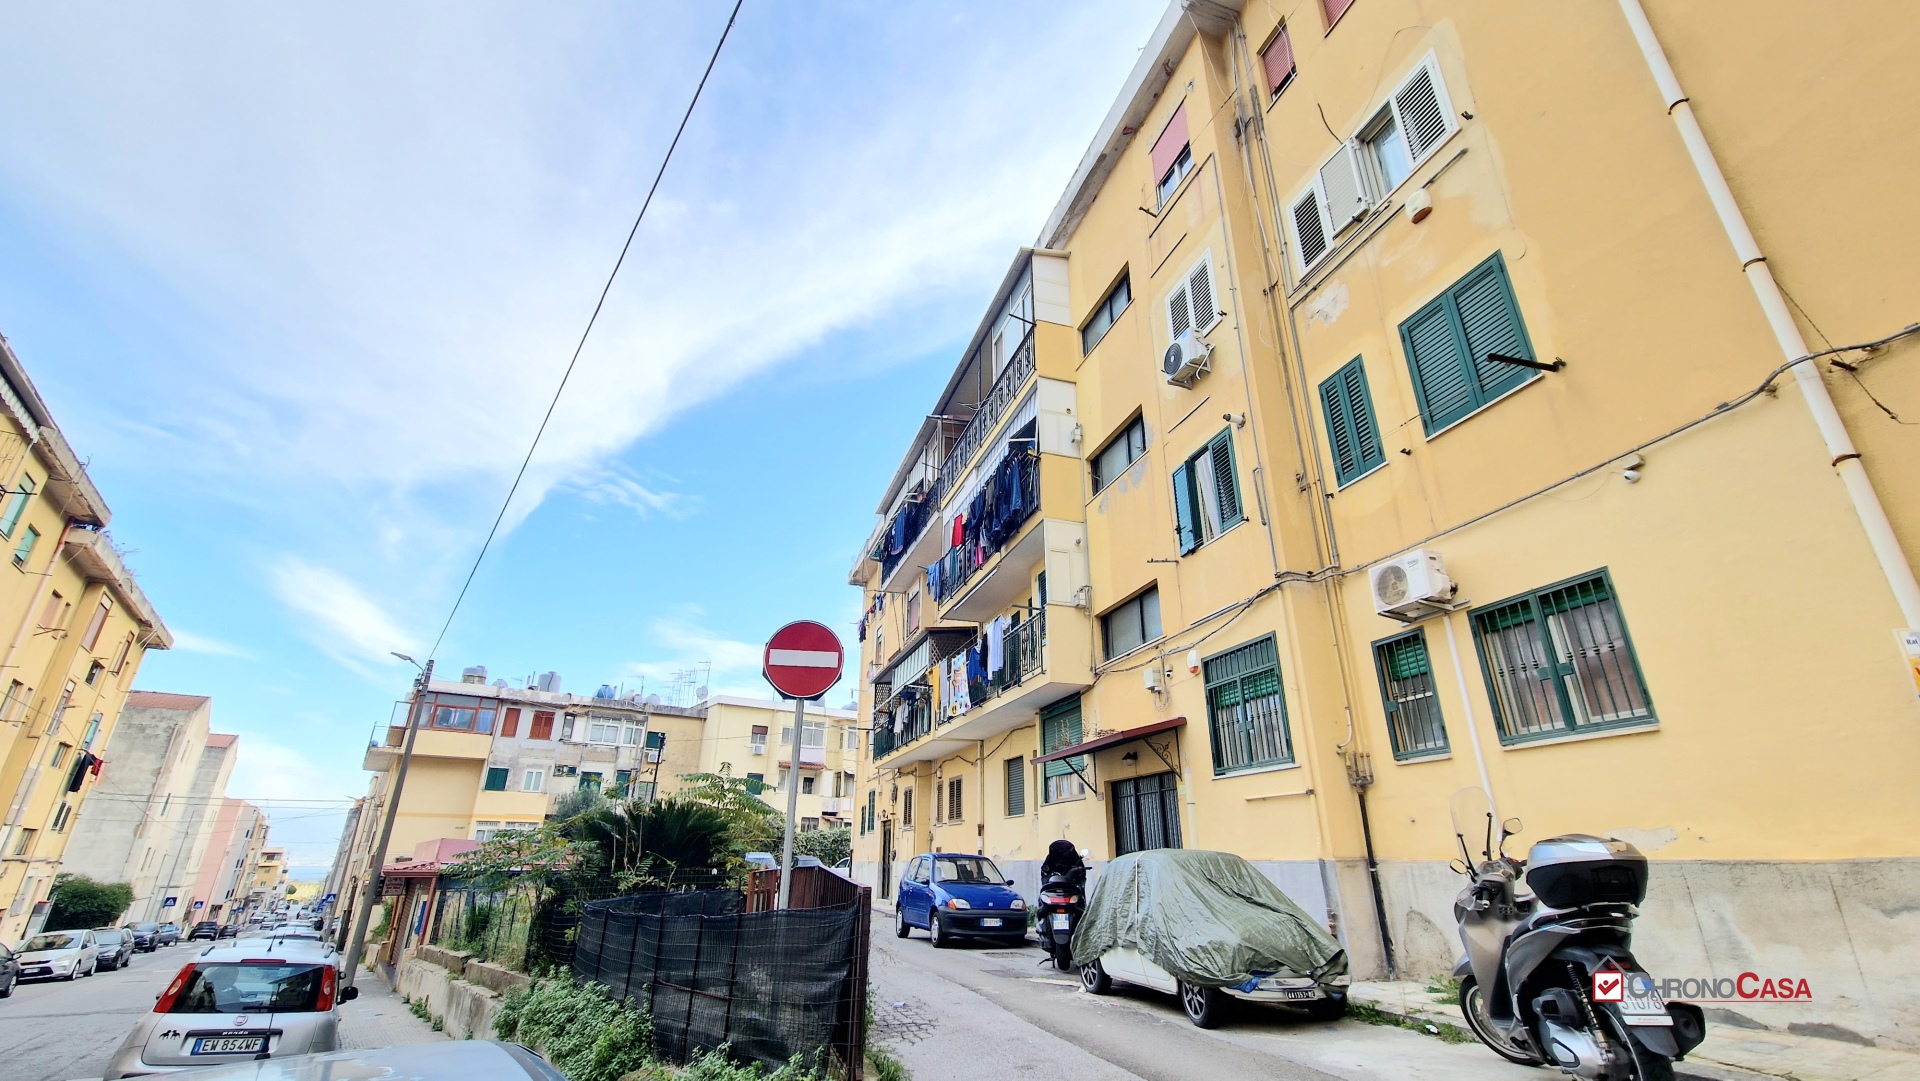 Trilocale in Vendita a Messina